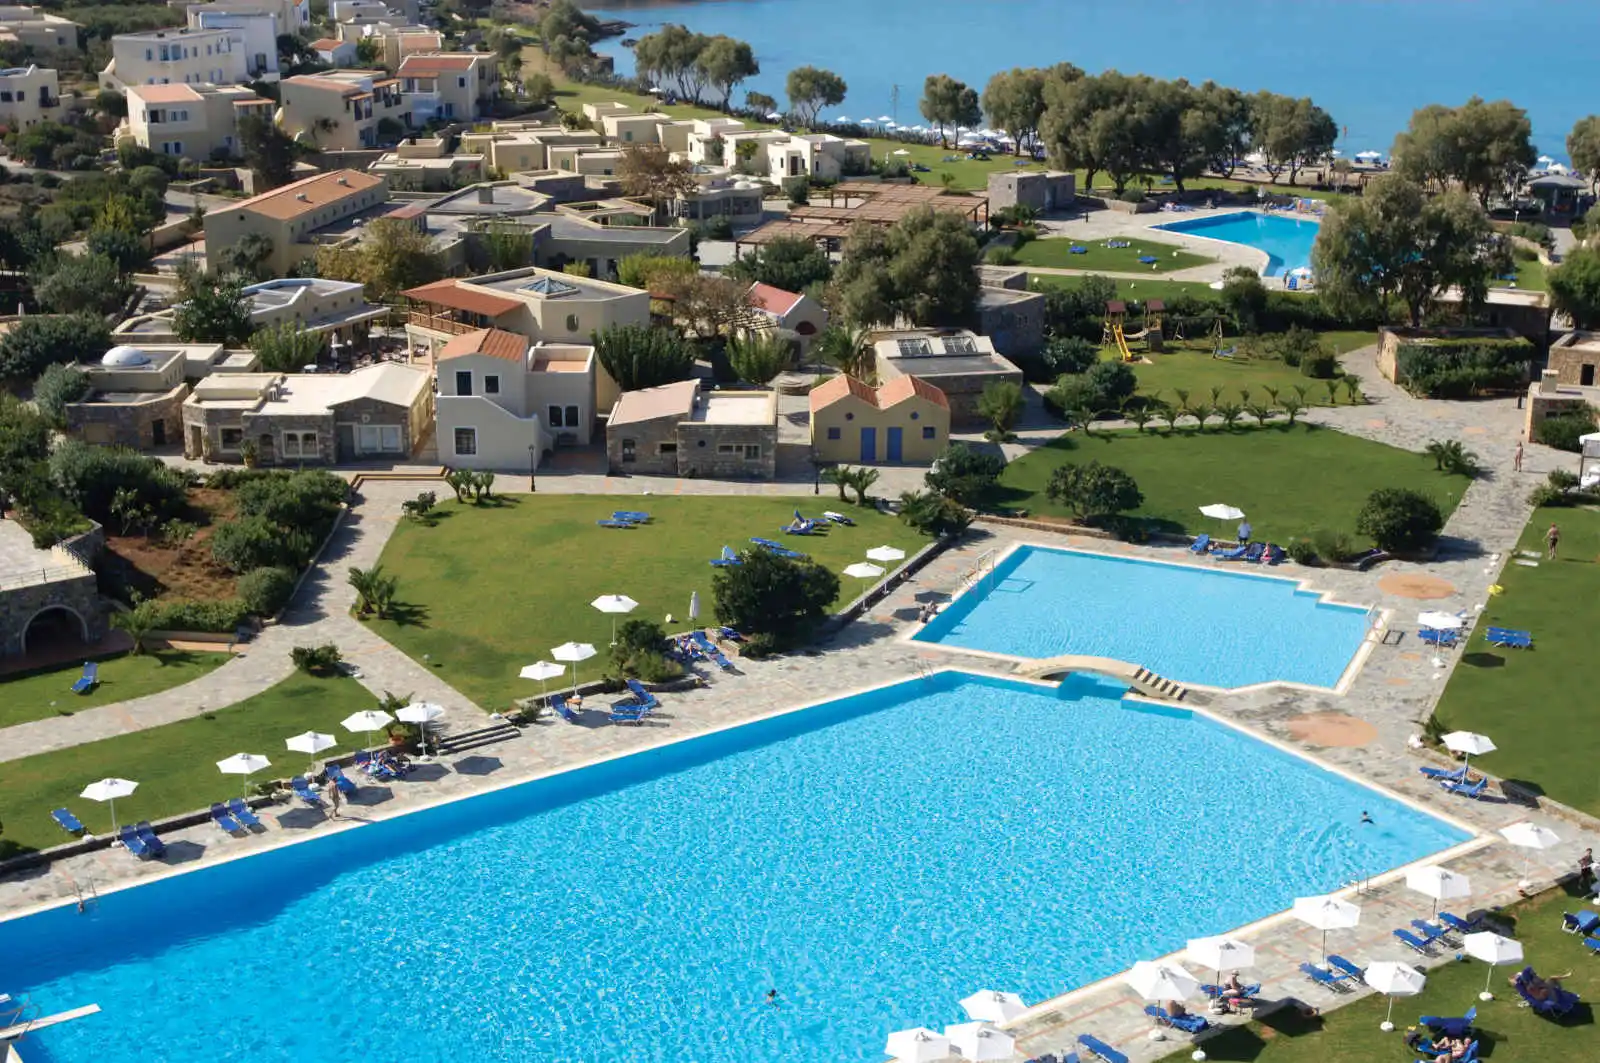 Crète - Malia - Grèce - Iles grecques - Kalimera Kriti Hotel & Village Resort 5*